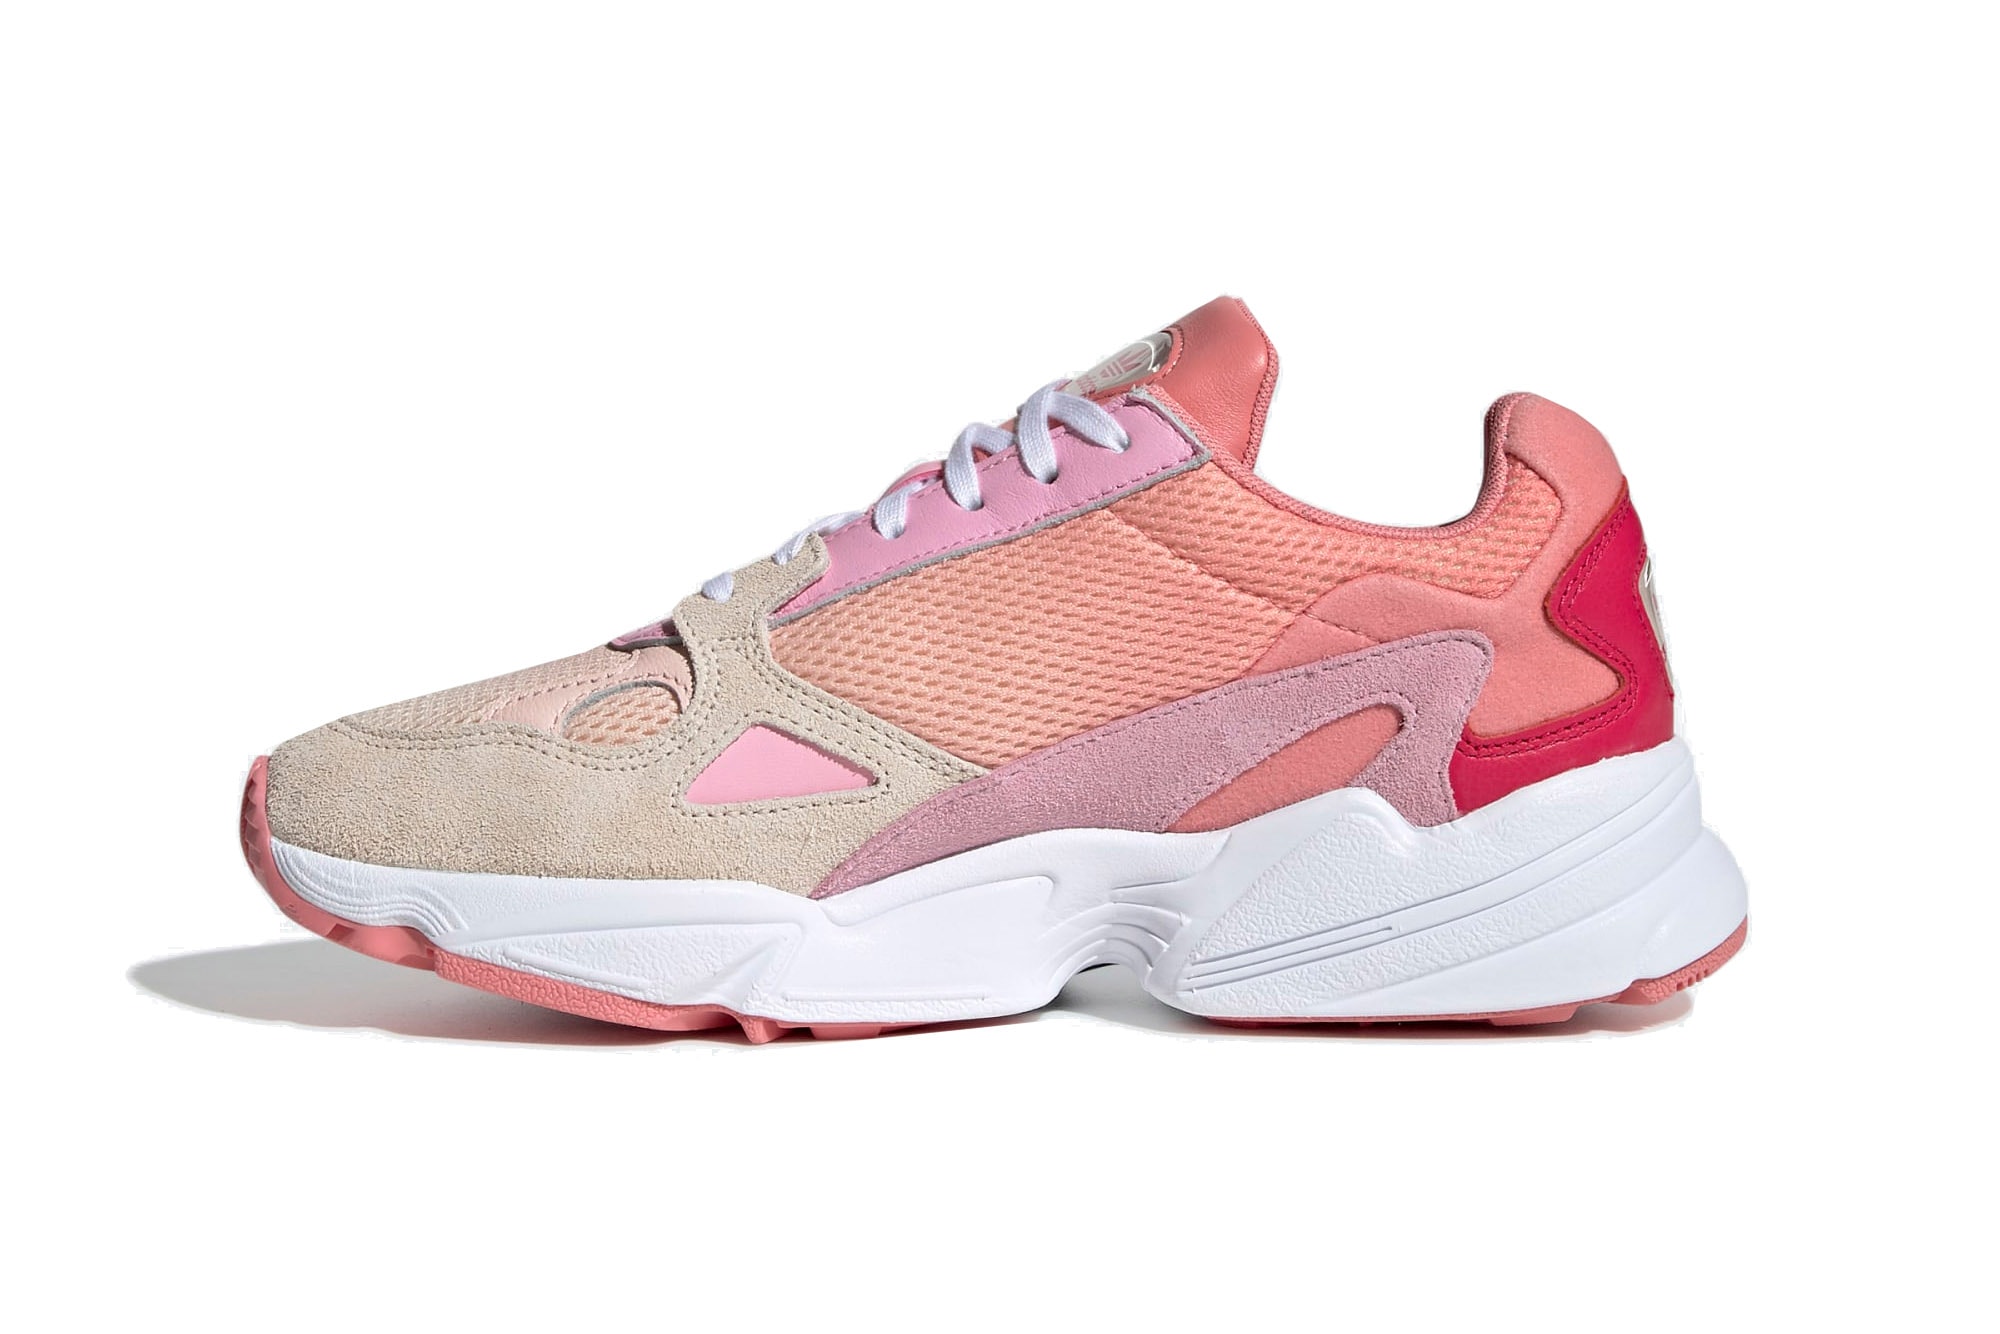 adidas Originals Falcon Coral/True Pink Release White Sneaker Shoe White Sole Summer Release